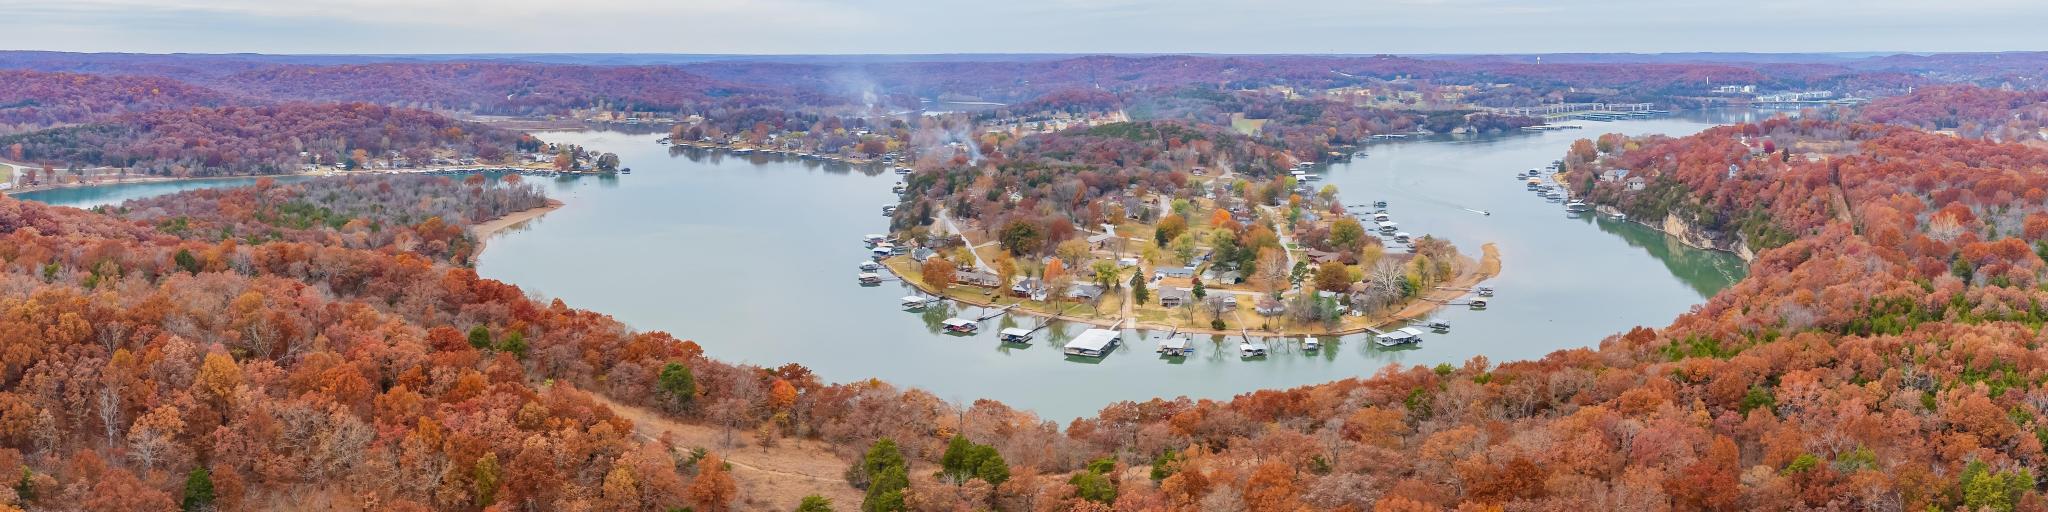 Aerial view of the Lake Ozark, Missouri, USA